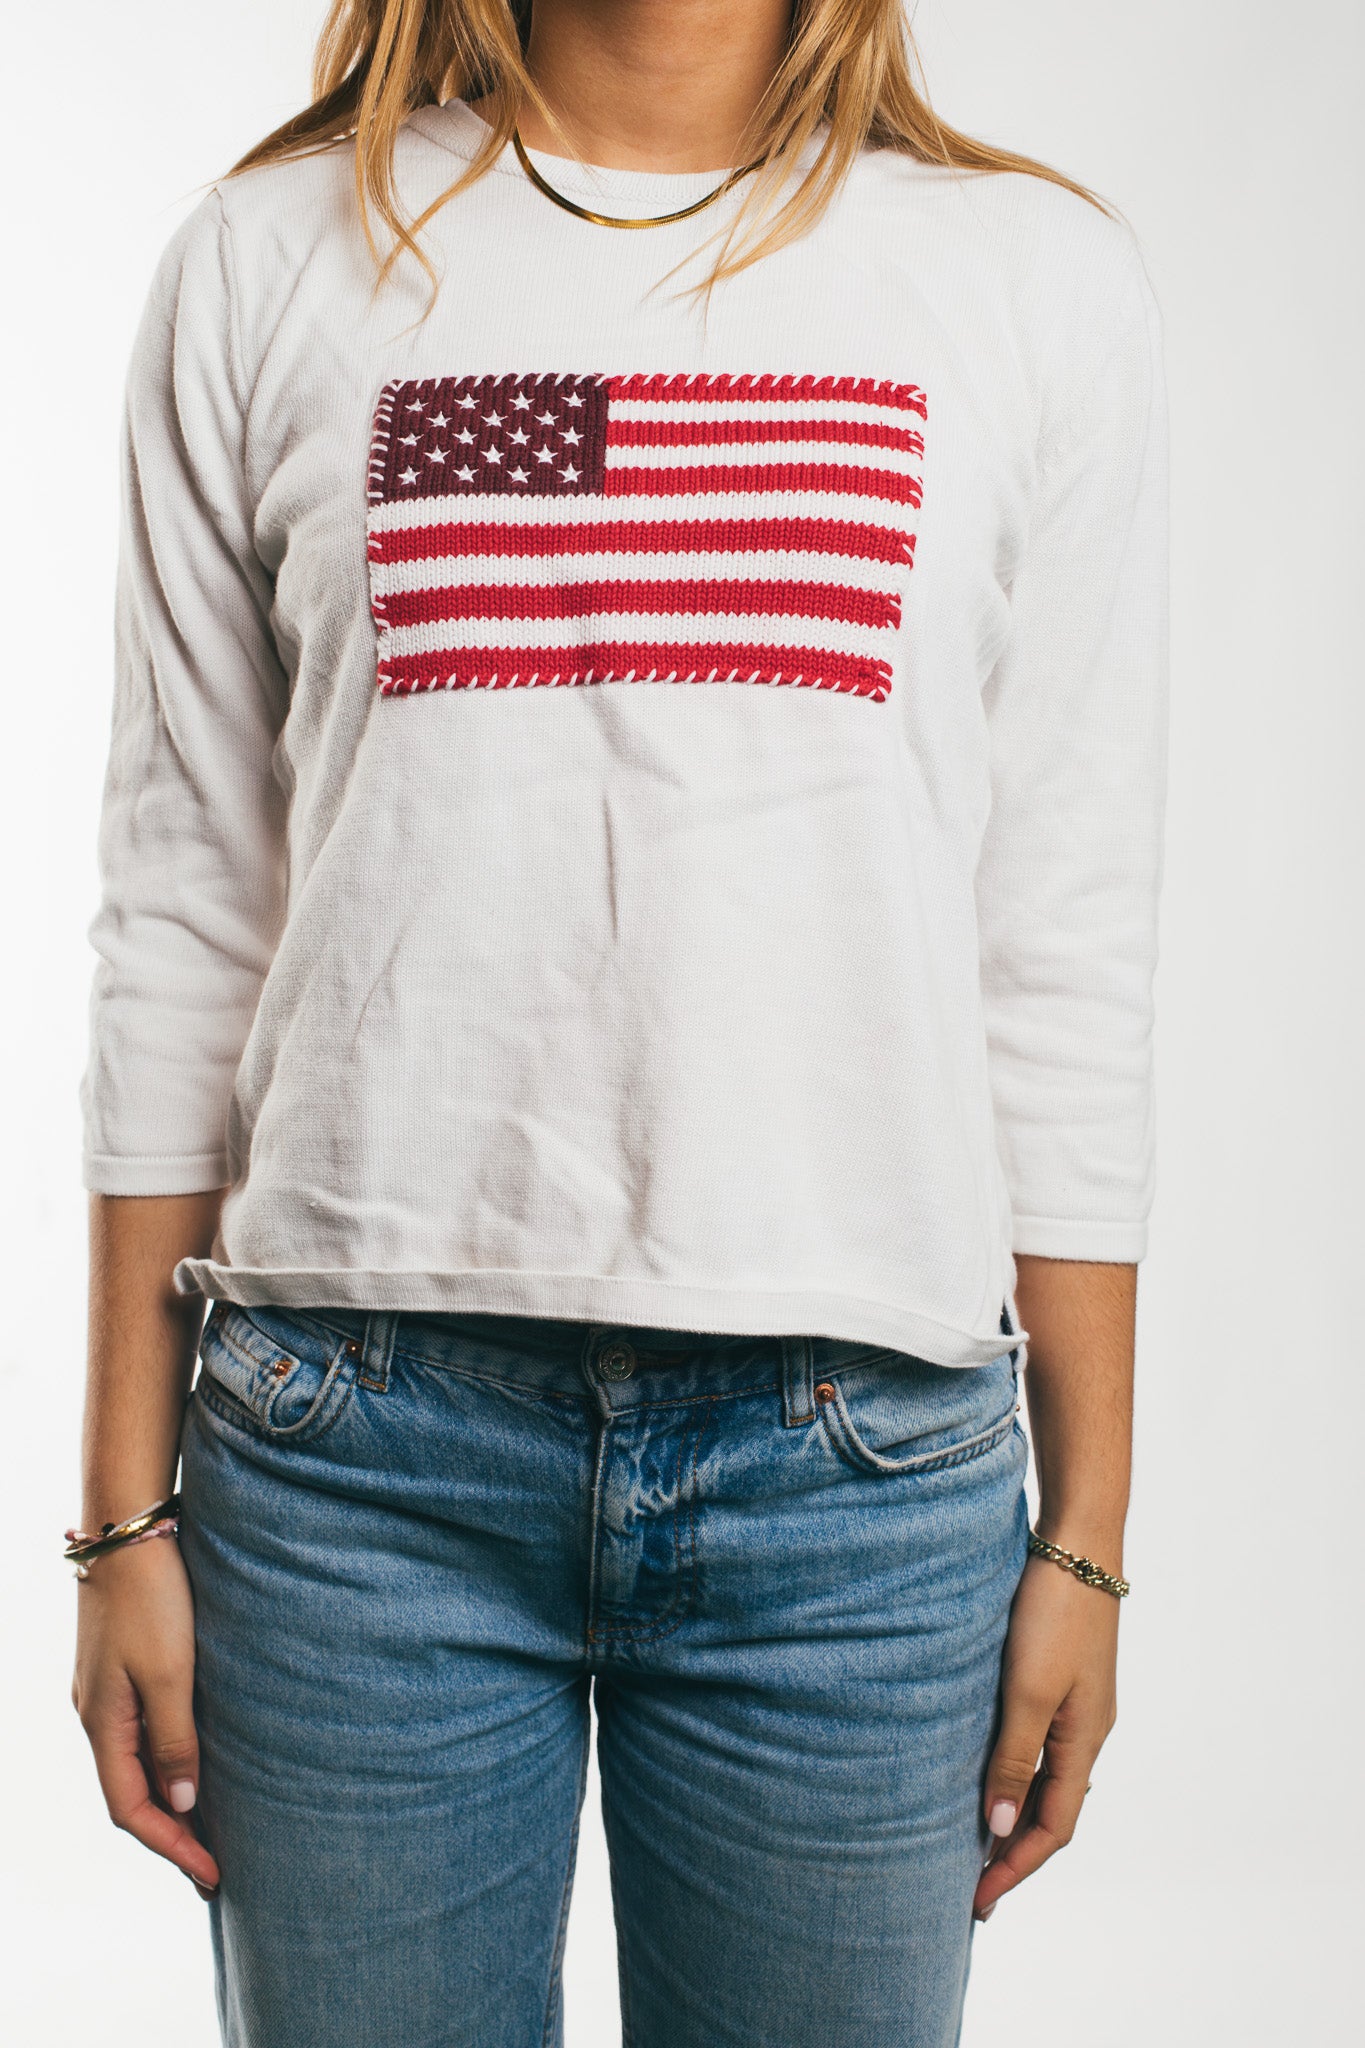 USA Flag - Sweatshirt (XS)